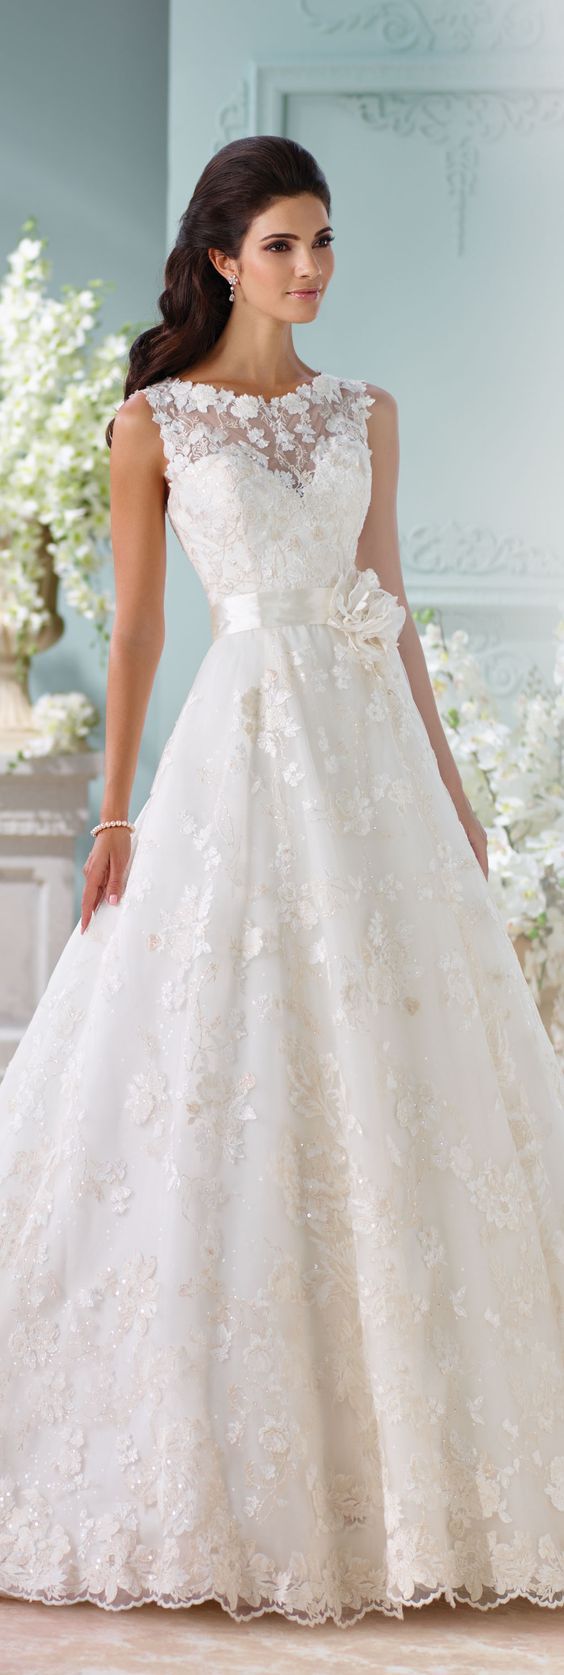 زفاف - Wedding Dress With Lace Back